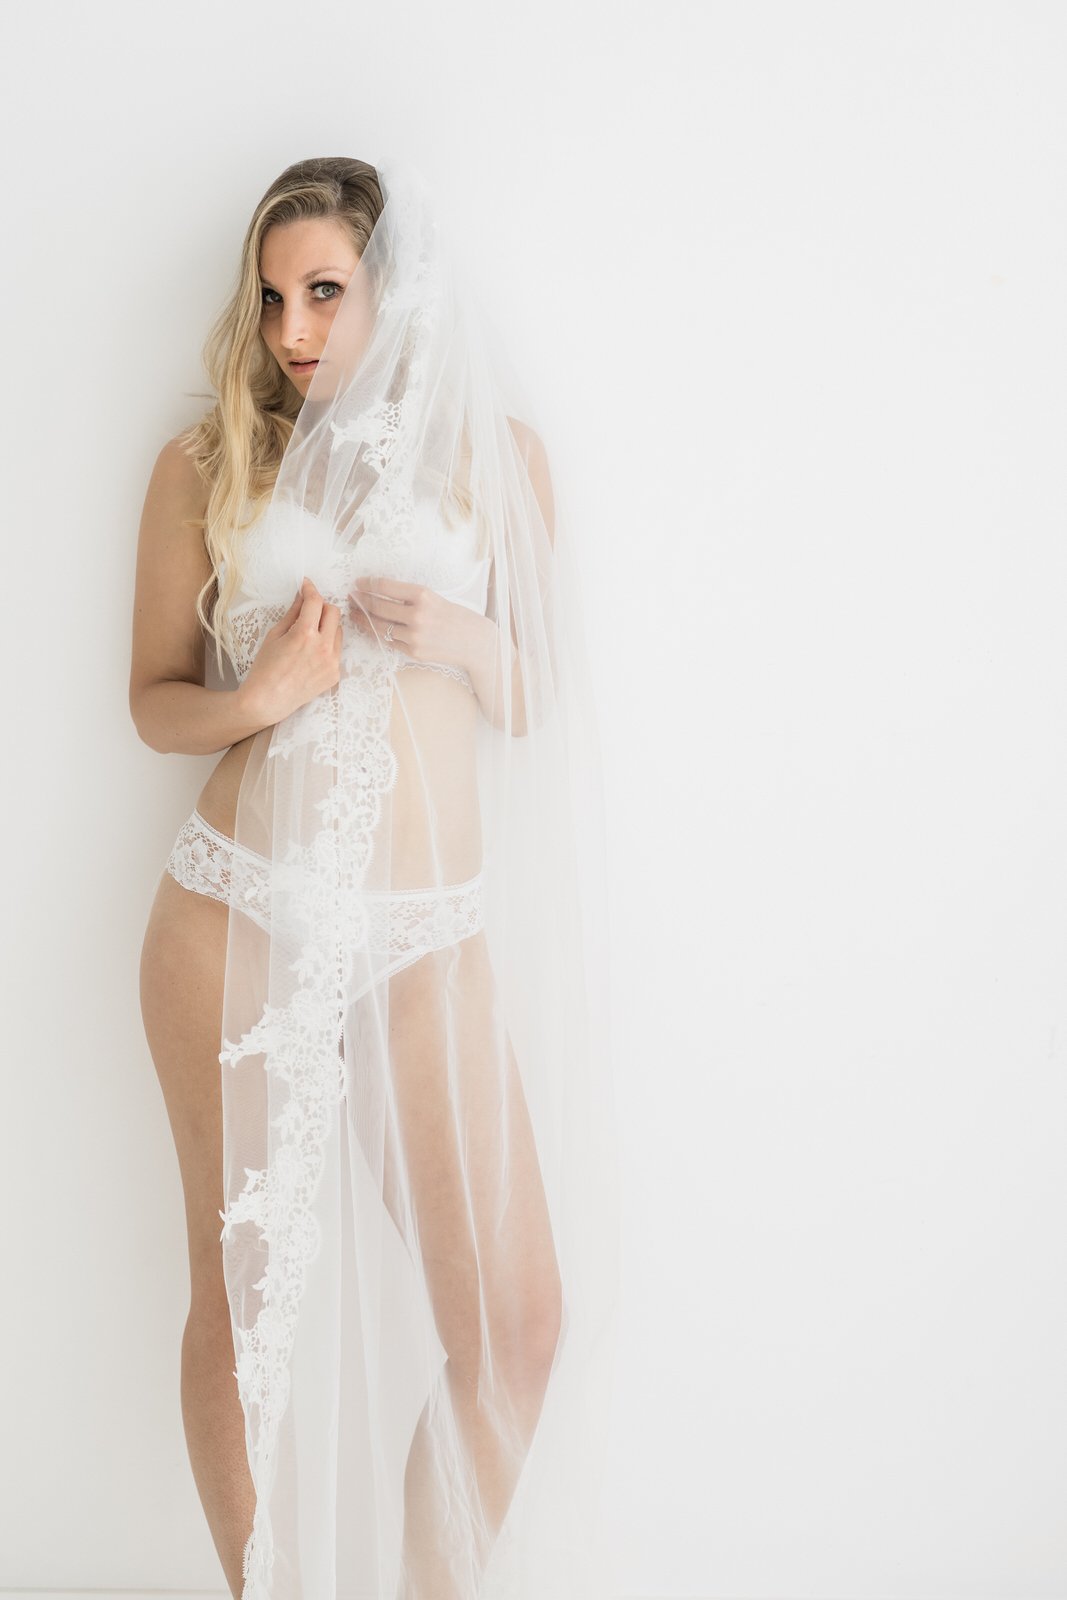  Bridal boudoir session, white 